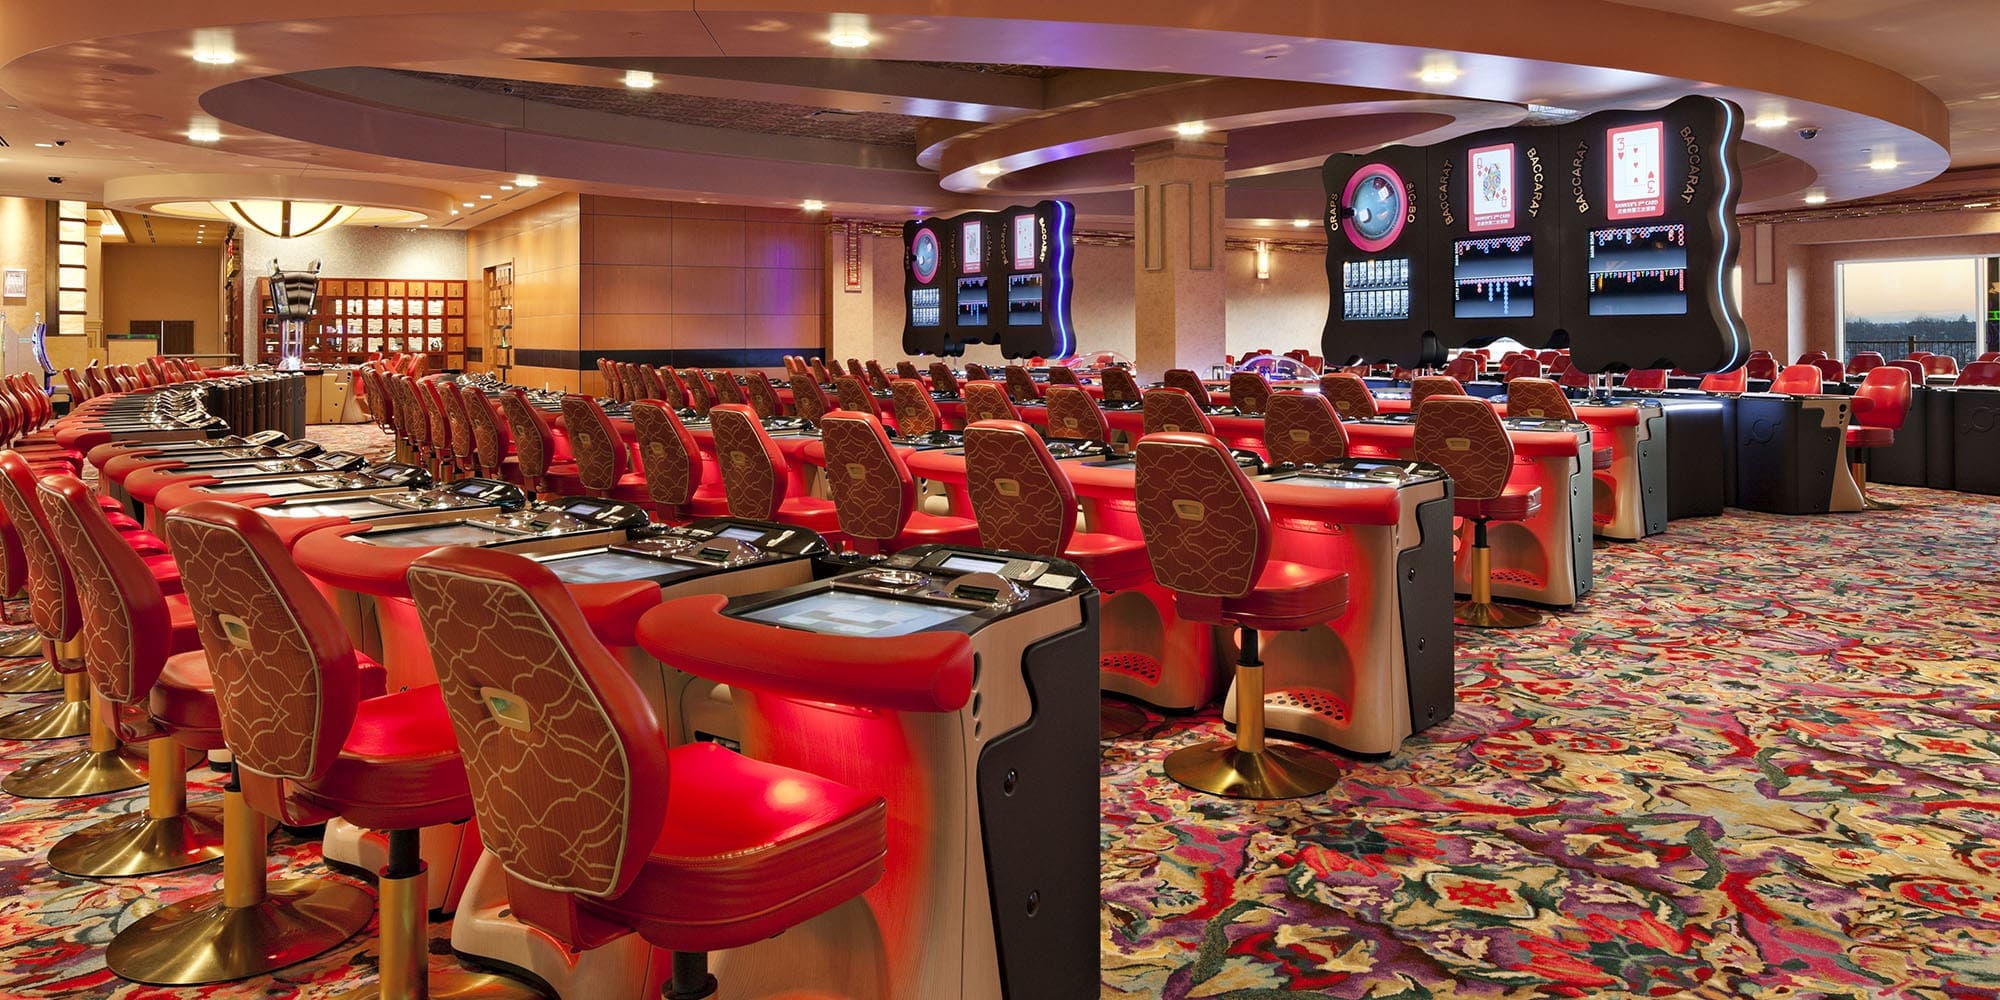 New York Casino Resort has 5 reasons that make it something big